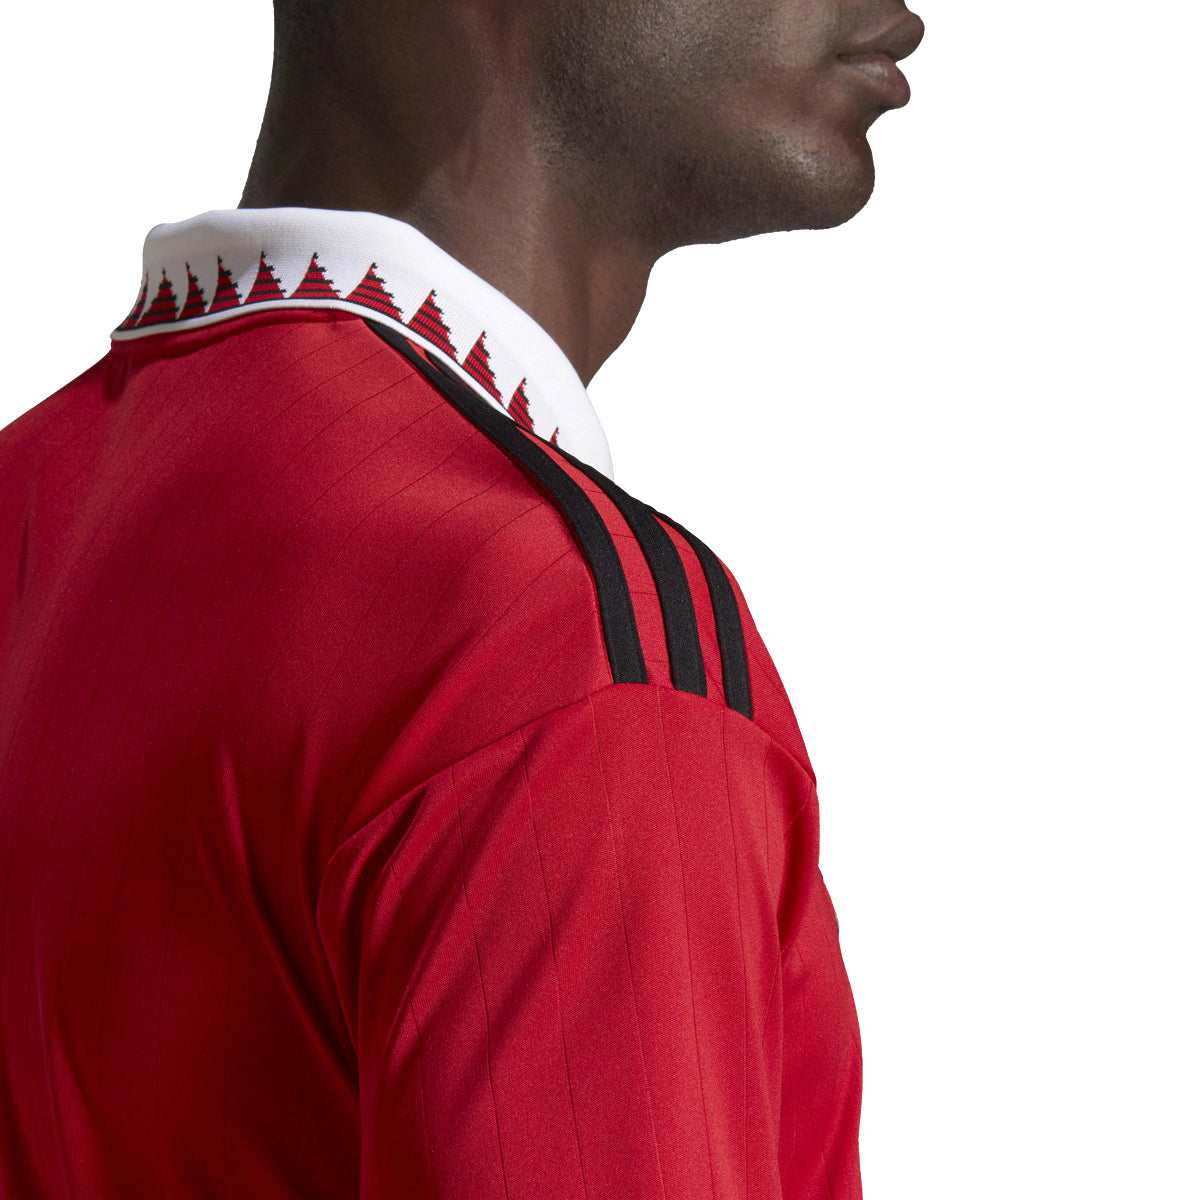 Men's adidas Black Manchester United Retro T-Shirt